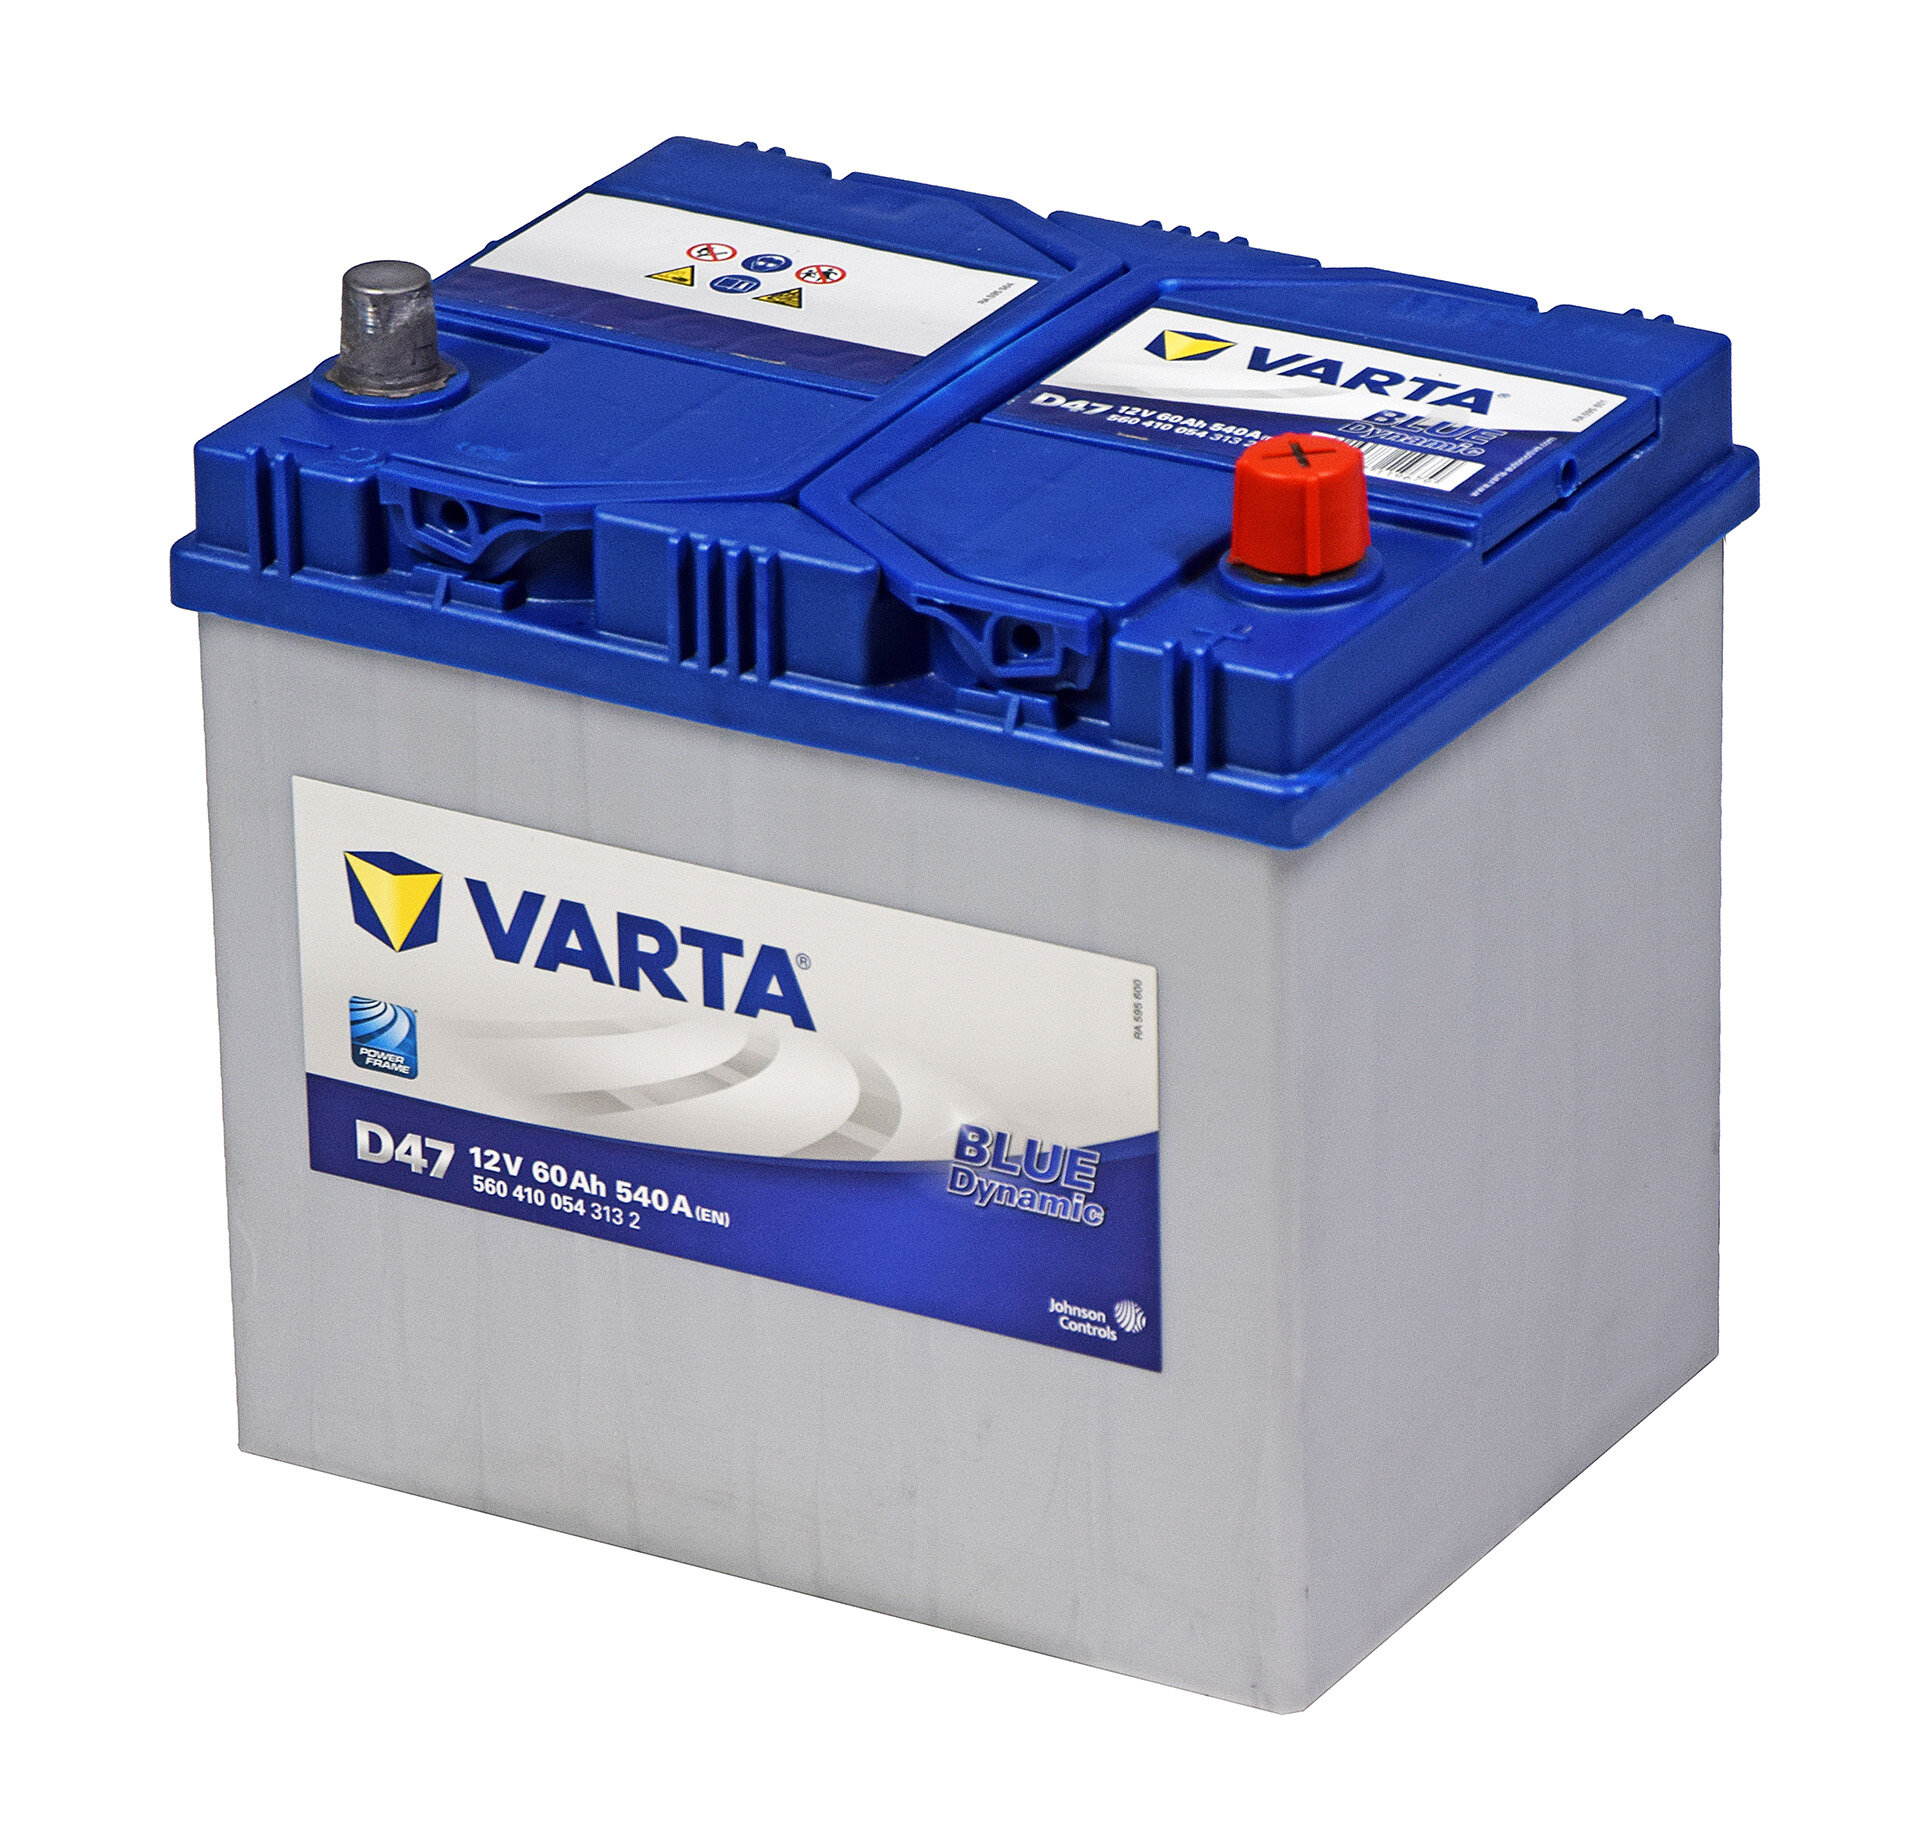 560410054 (D47) VARTA, Batteria auto Varta 12V 60Ah 540A(EN), DX (0), BLUE  dynamic, Codice: D47